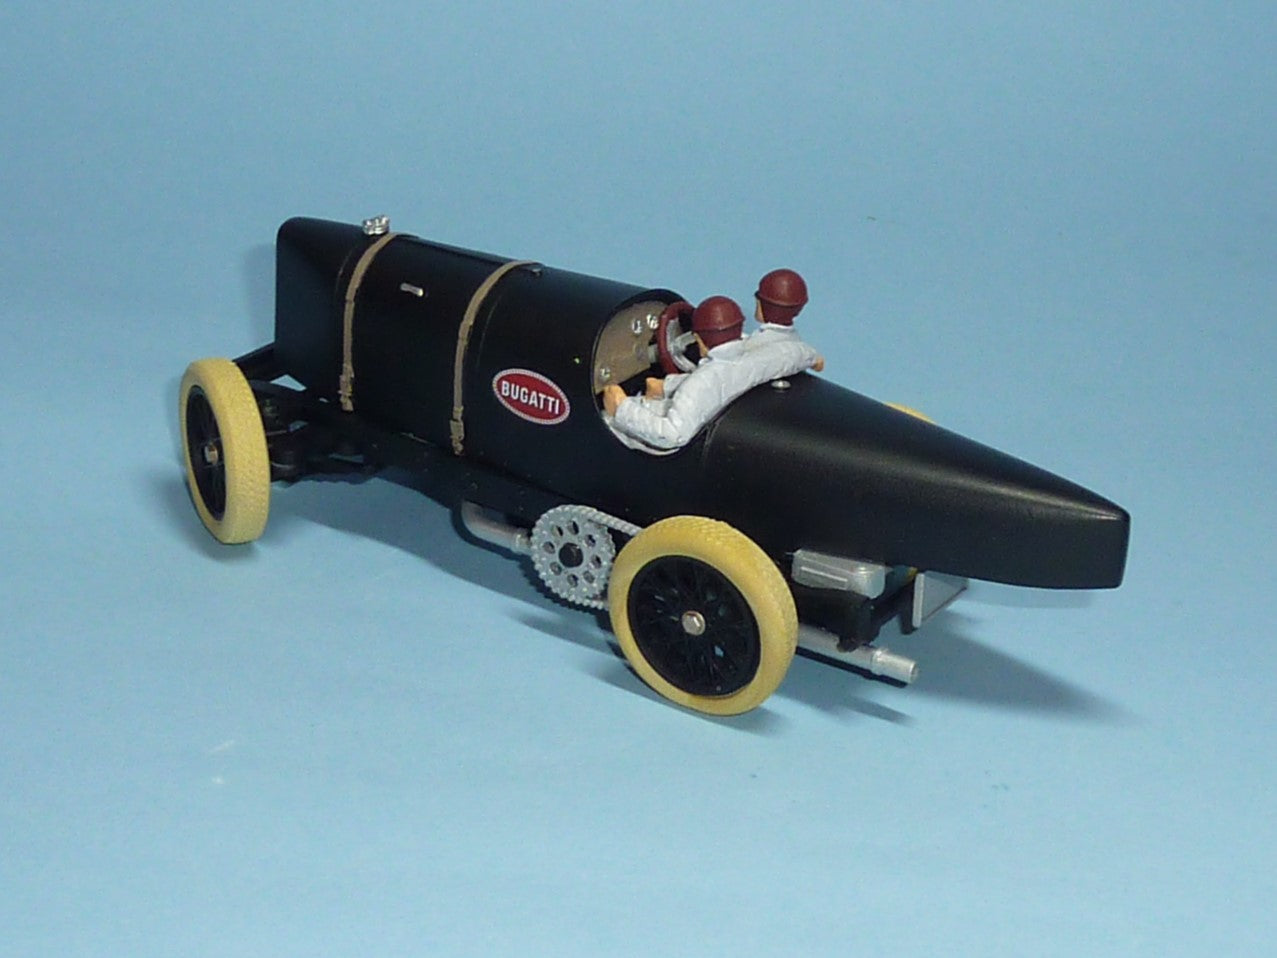 Edwardian GP Bugatti, Black Bess (ED-241)